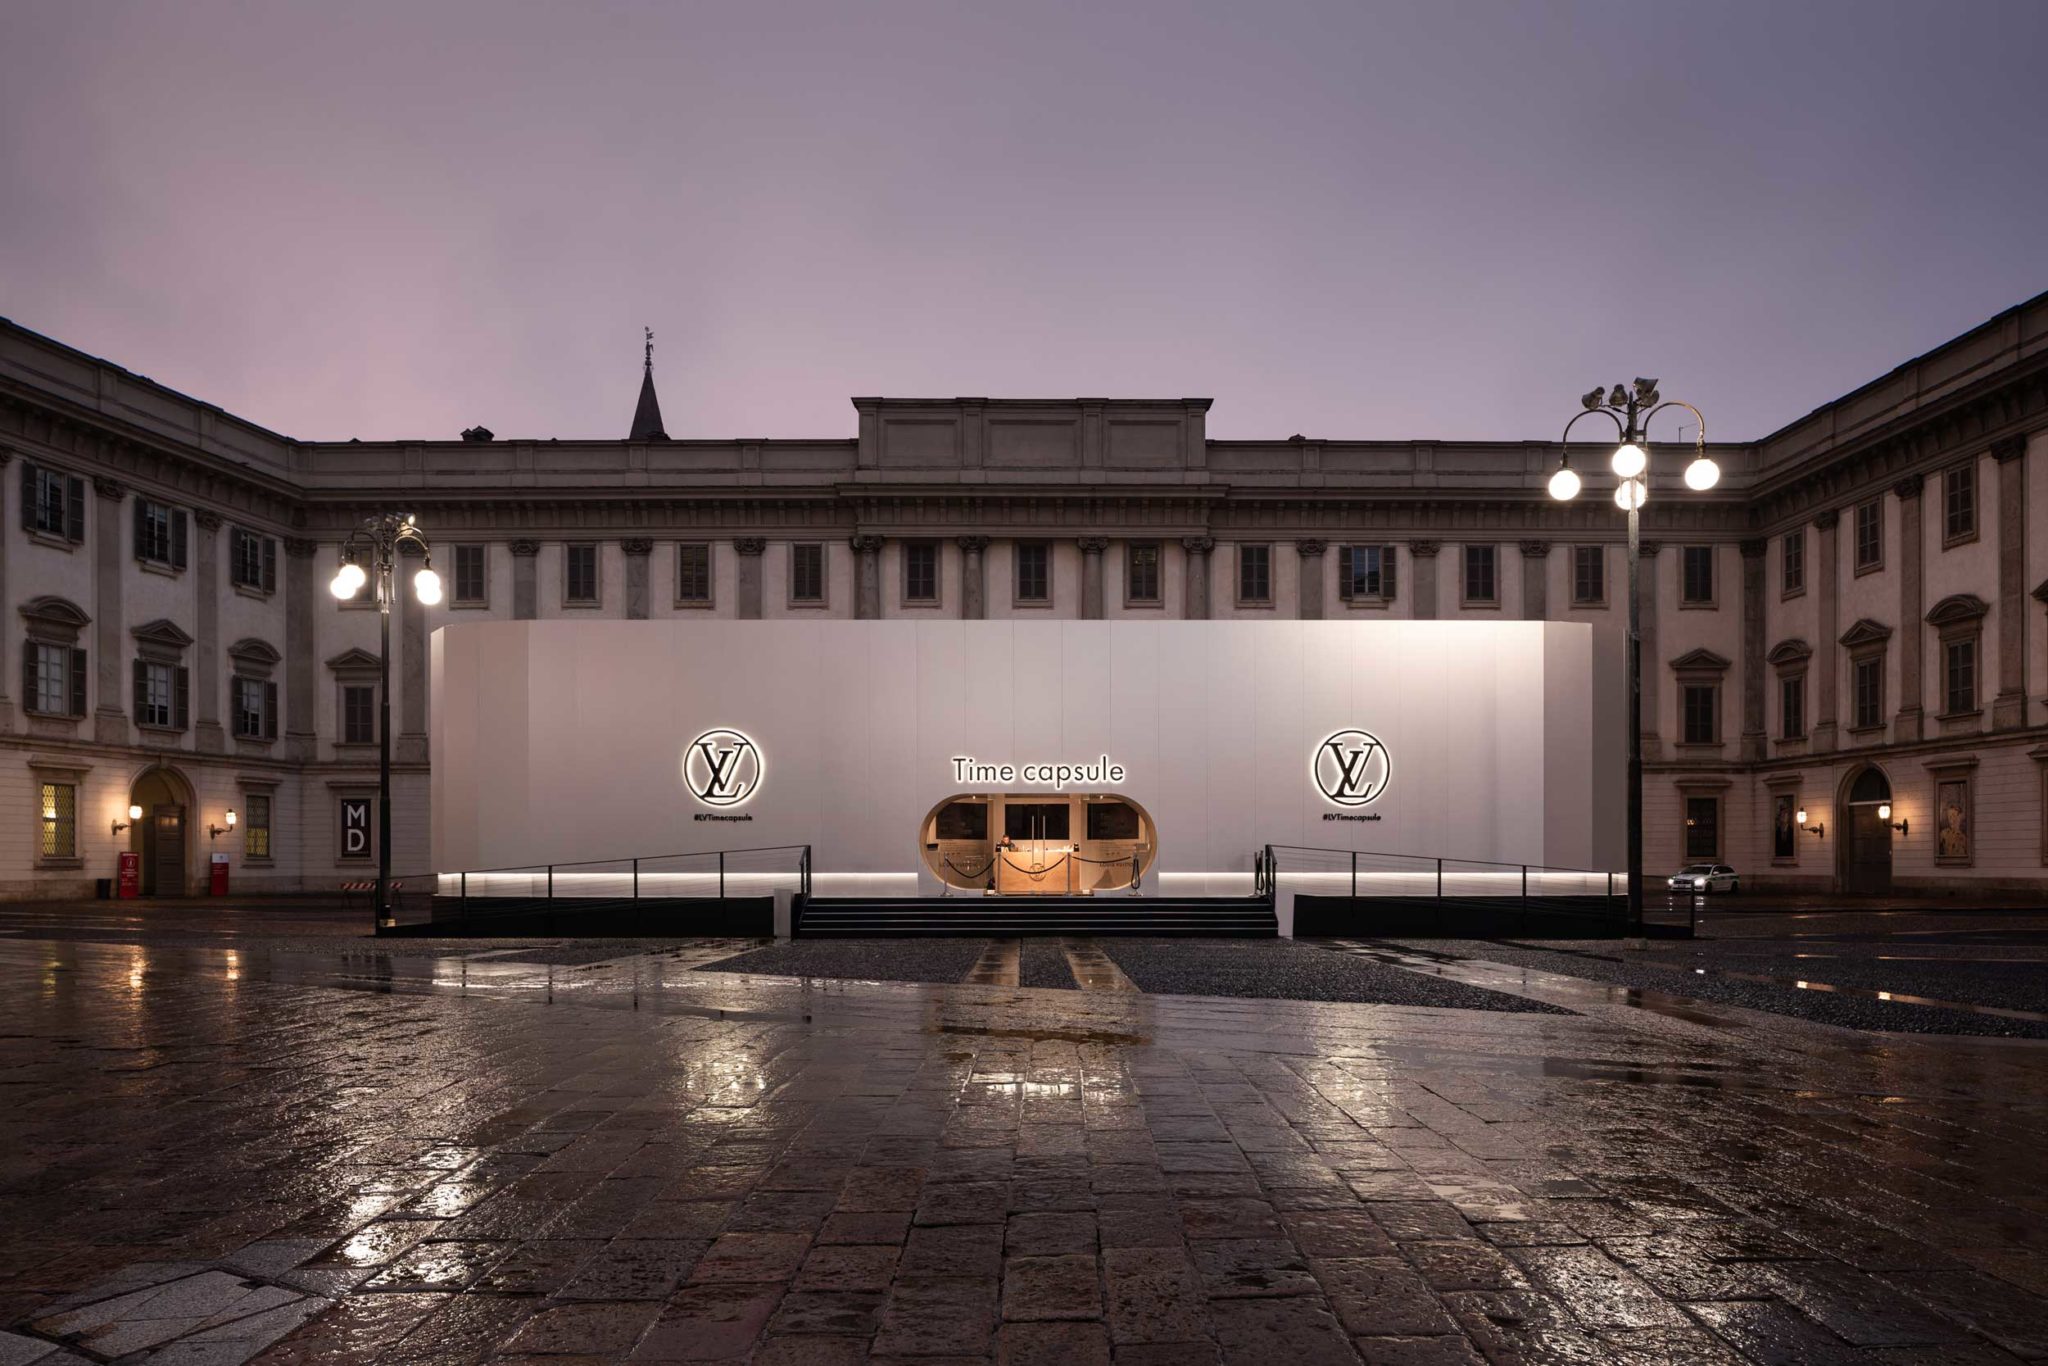 Louis Vuitton Time Capsule in Toronto